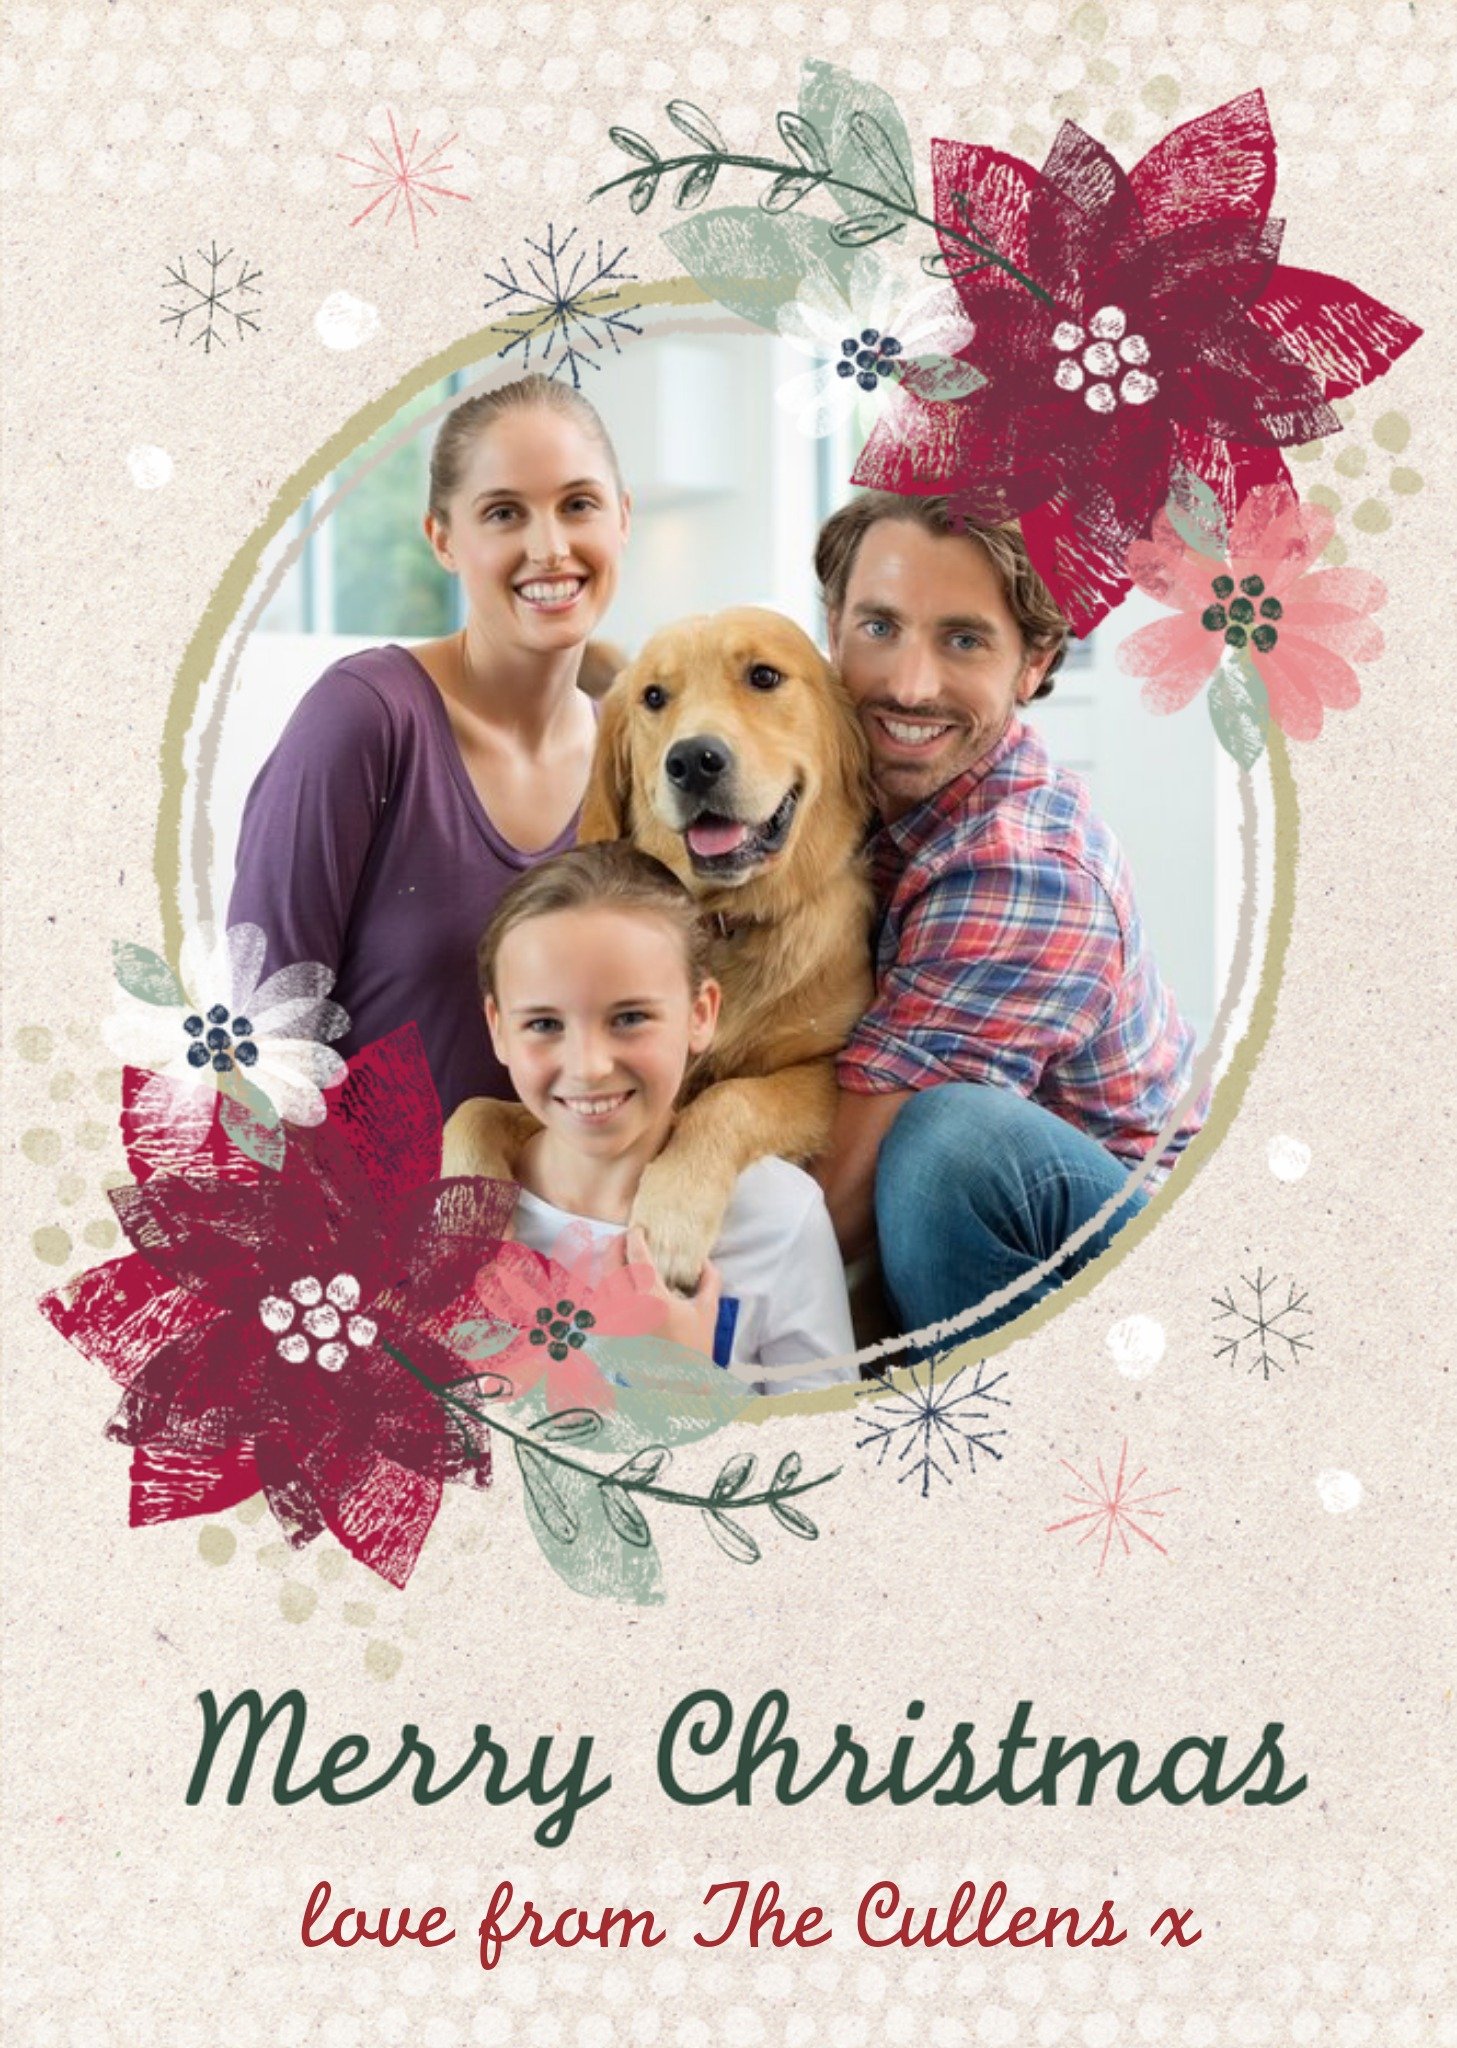 Moonpig Christmas Flower Border Personalised Family Photo Upload Merry Christmas Card, Large